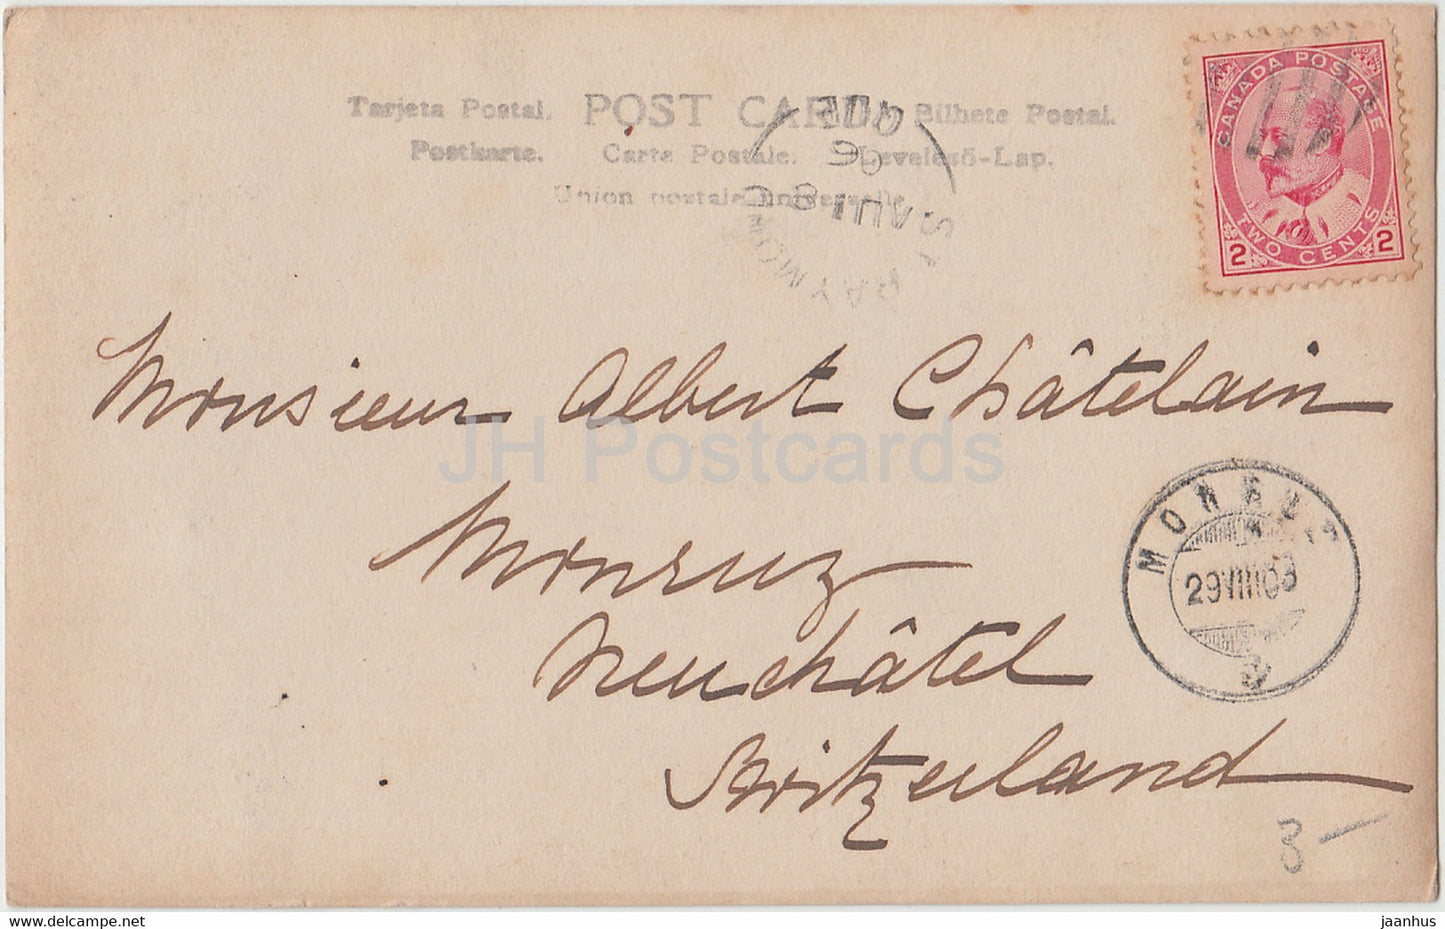 St Raymond - carte postale ancienne - 1906 - Canada - occasion